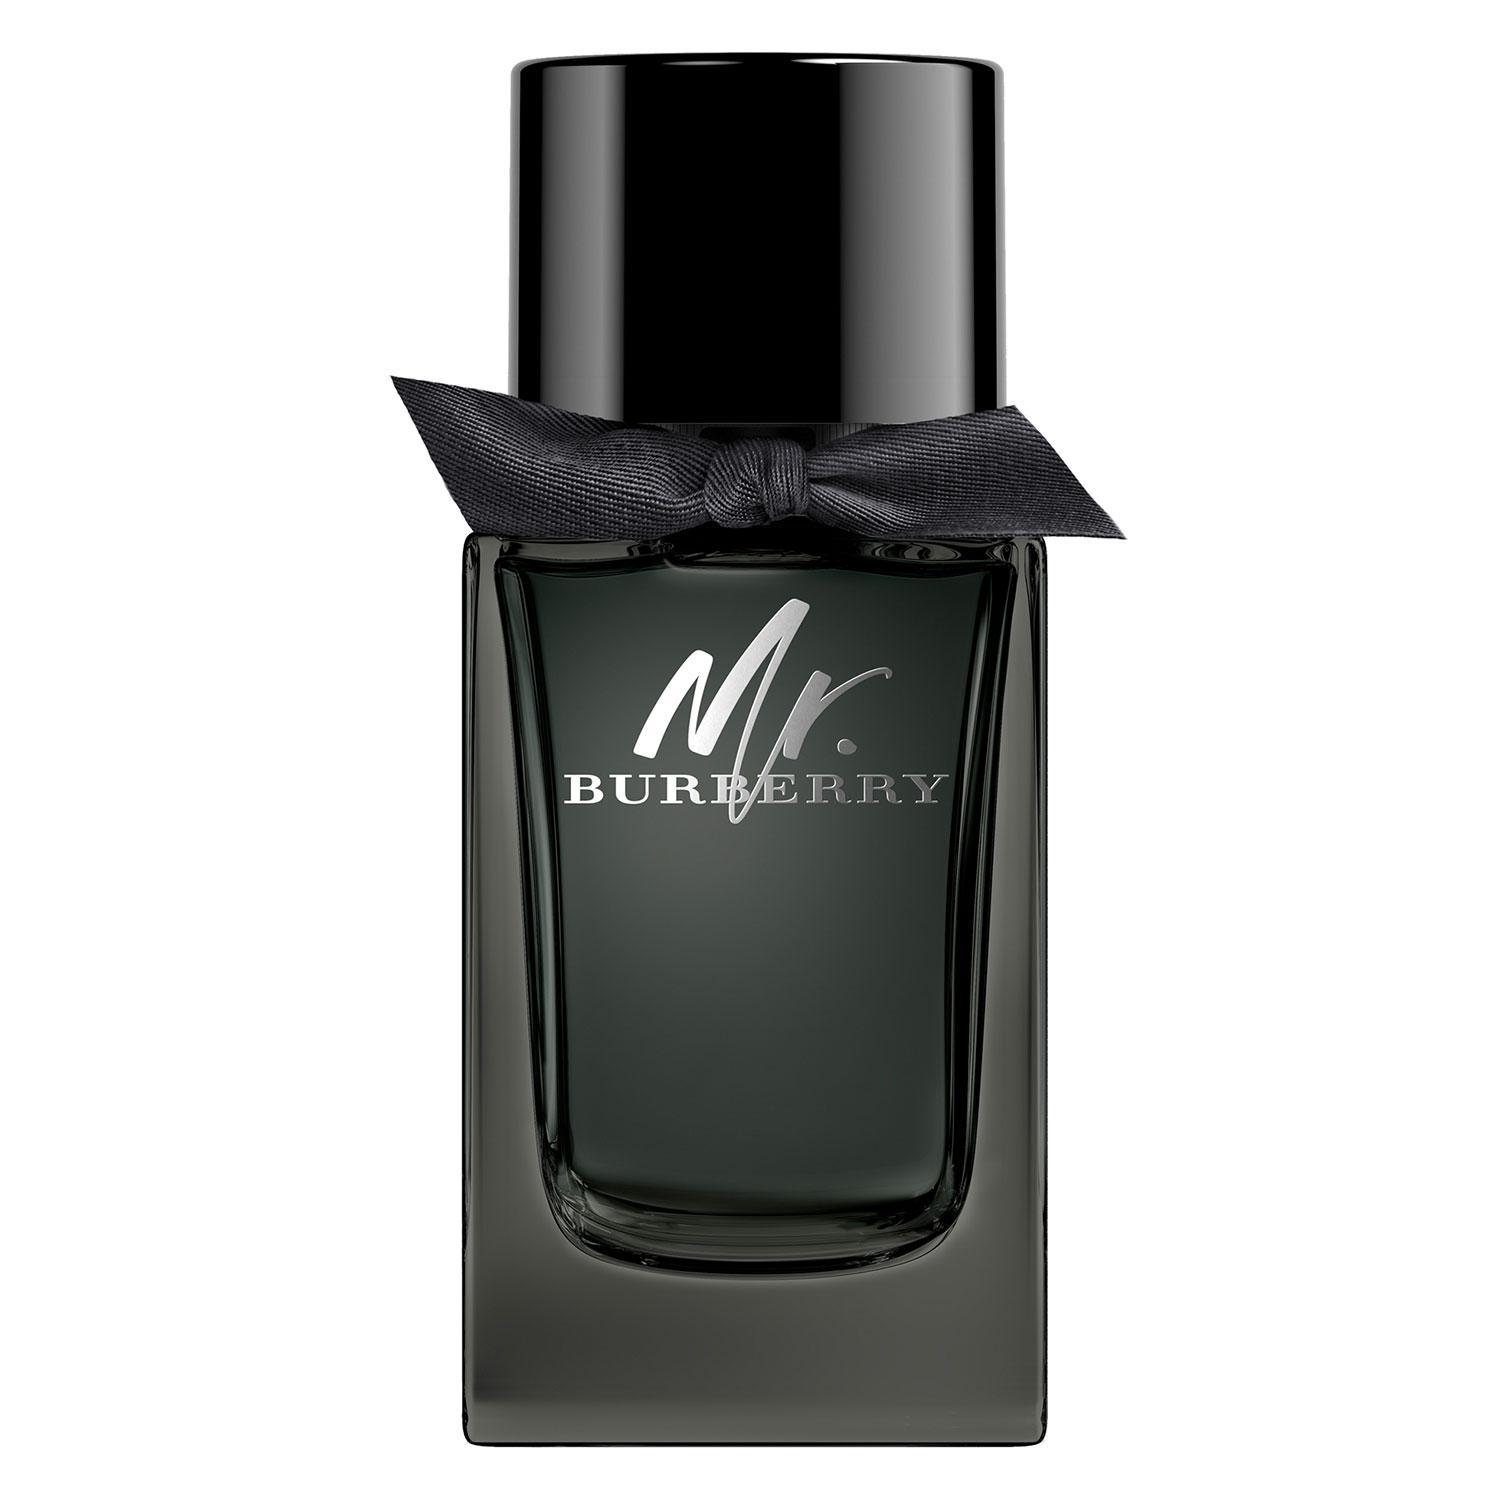 Mr. Burberry - Eau de Parfum